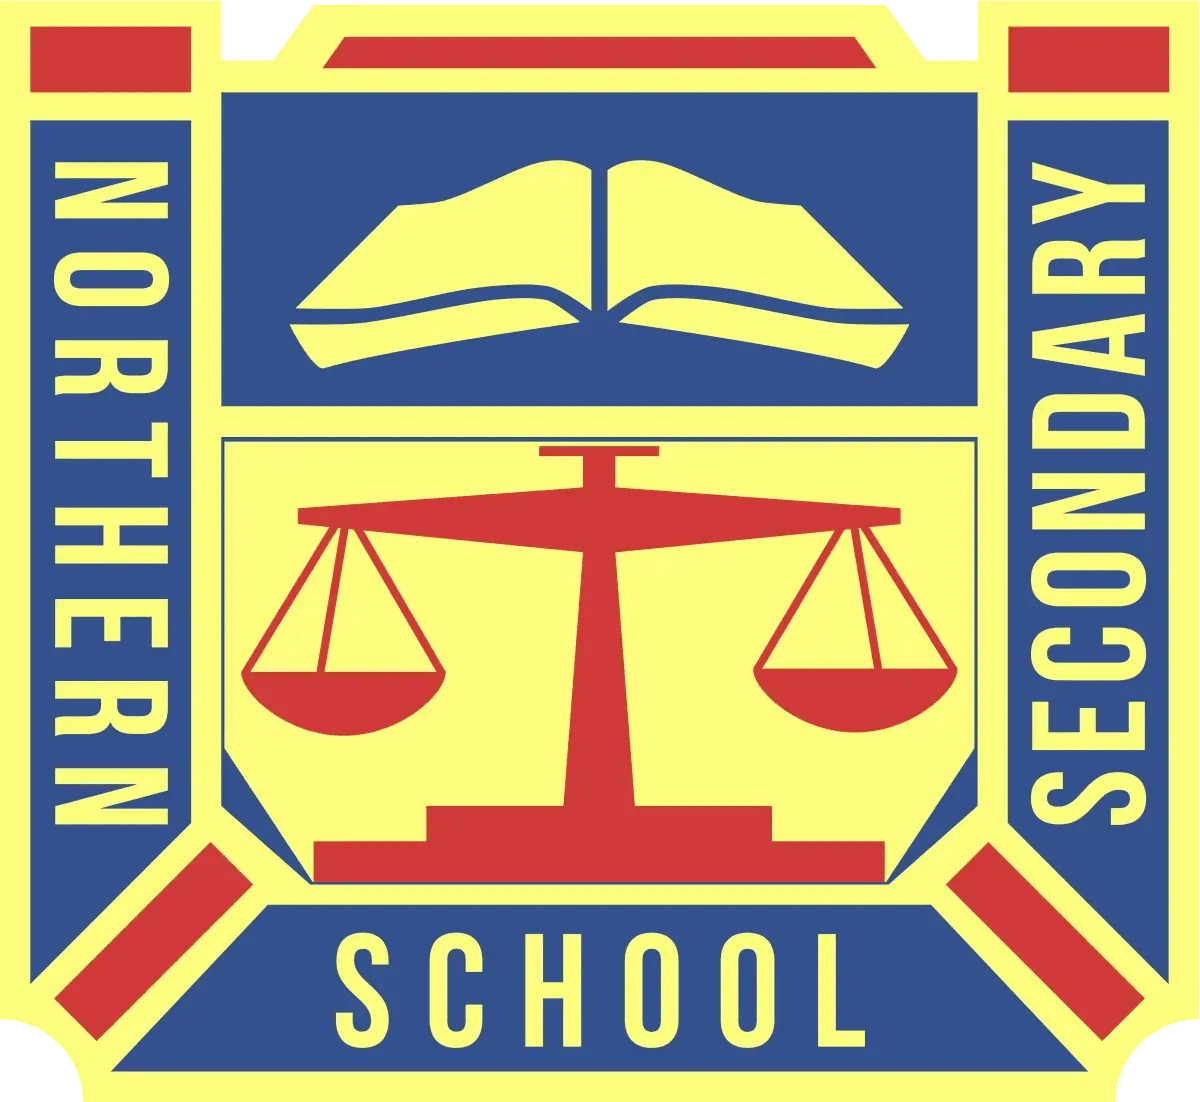 Northern Secondary School's logo